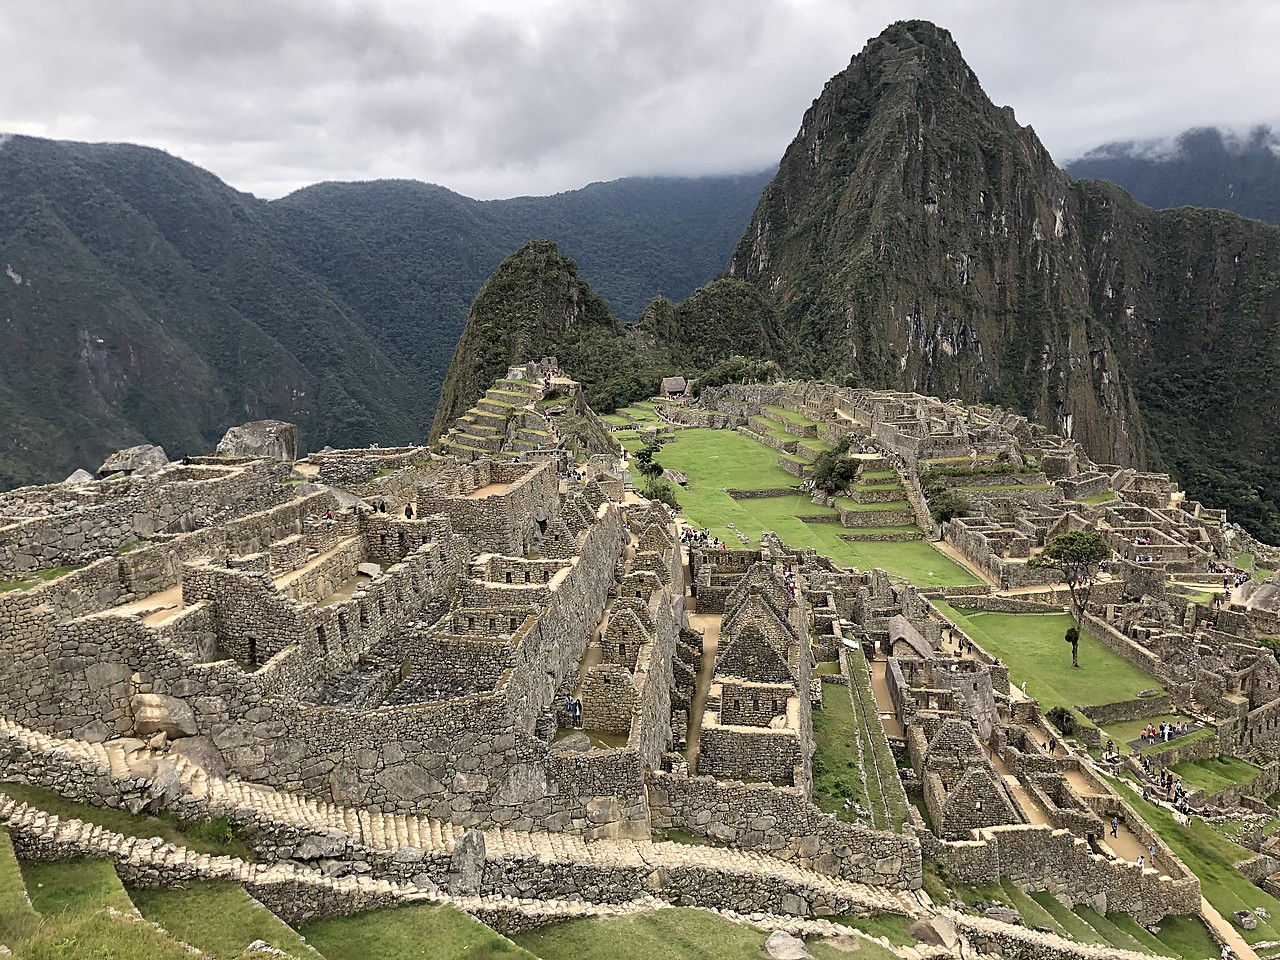 Hiking the Lares Trek to Machu Picchu